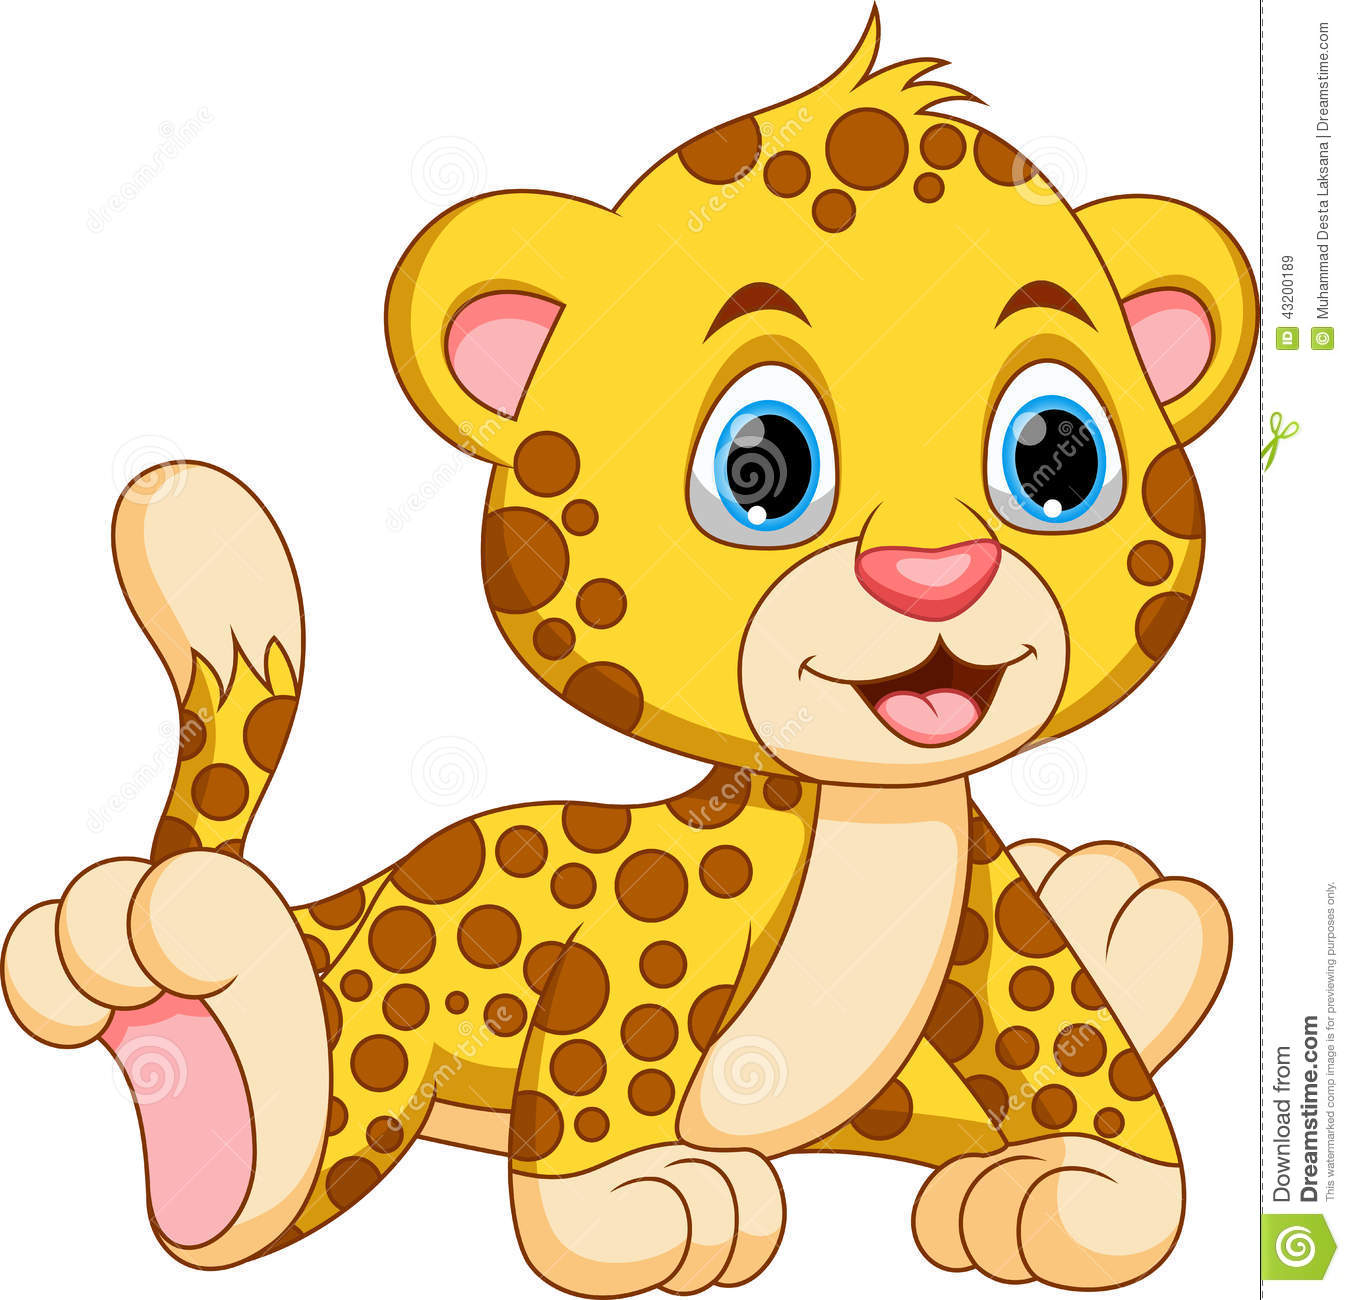 Cute Baby Cheetah Cartoon Stock Illustration   Image  43200189